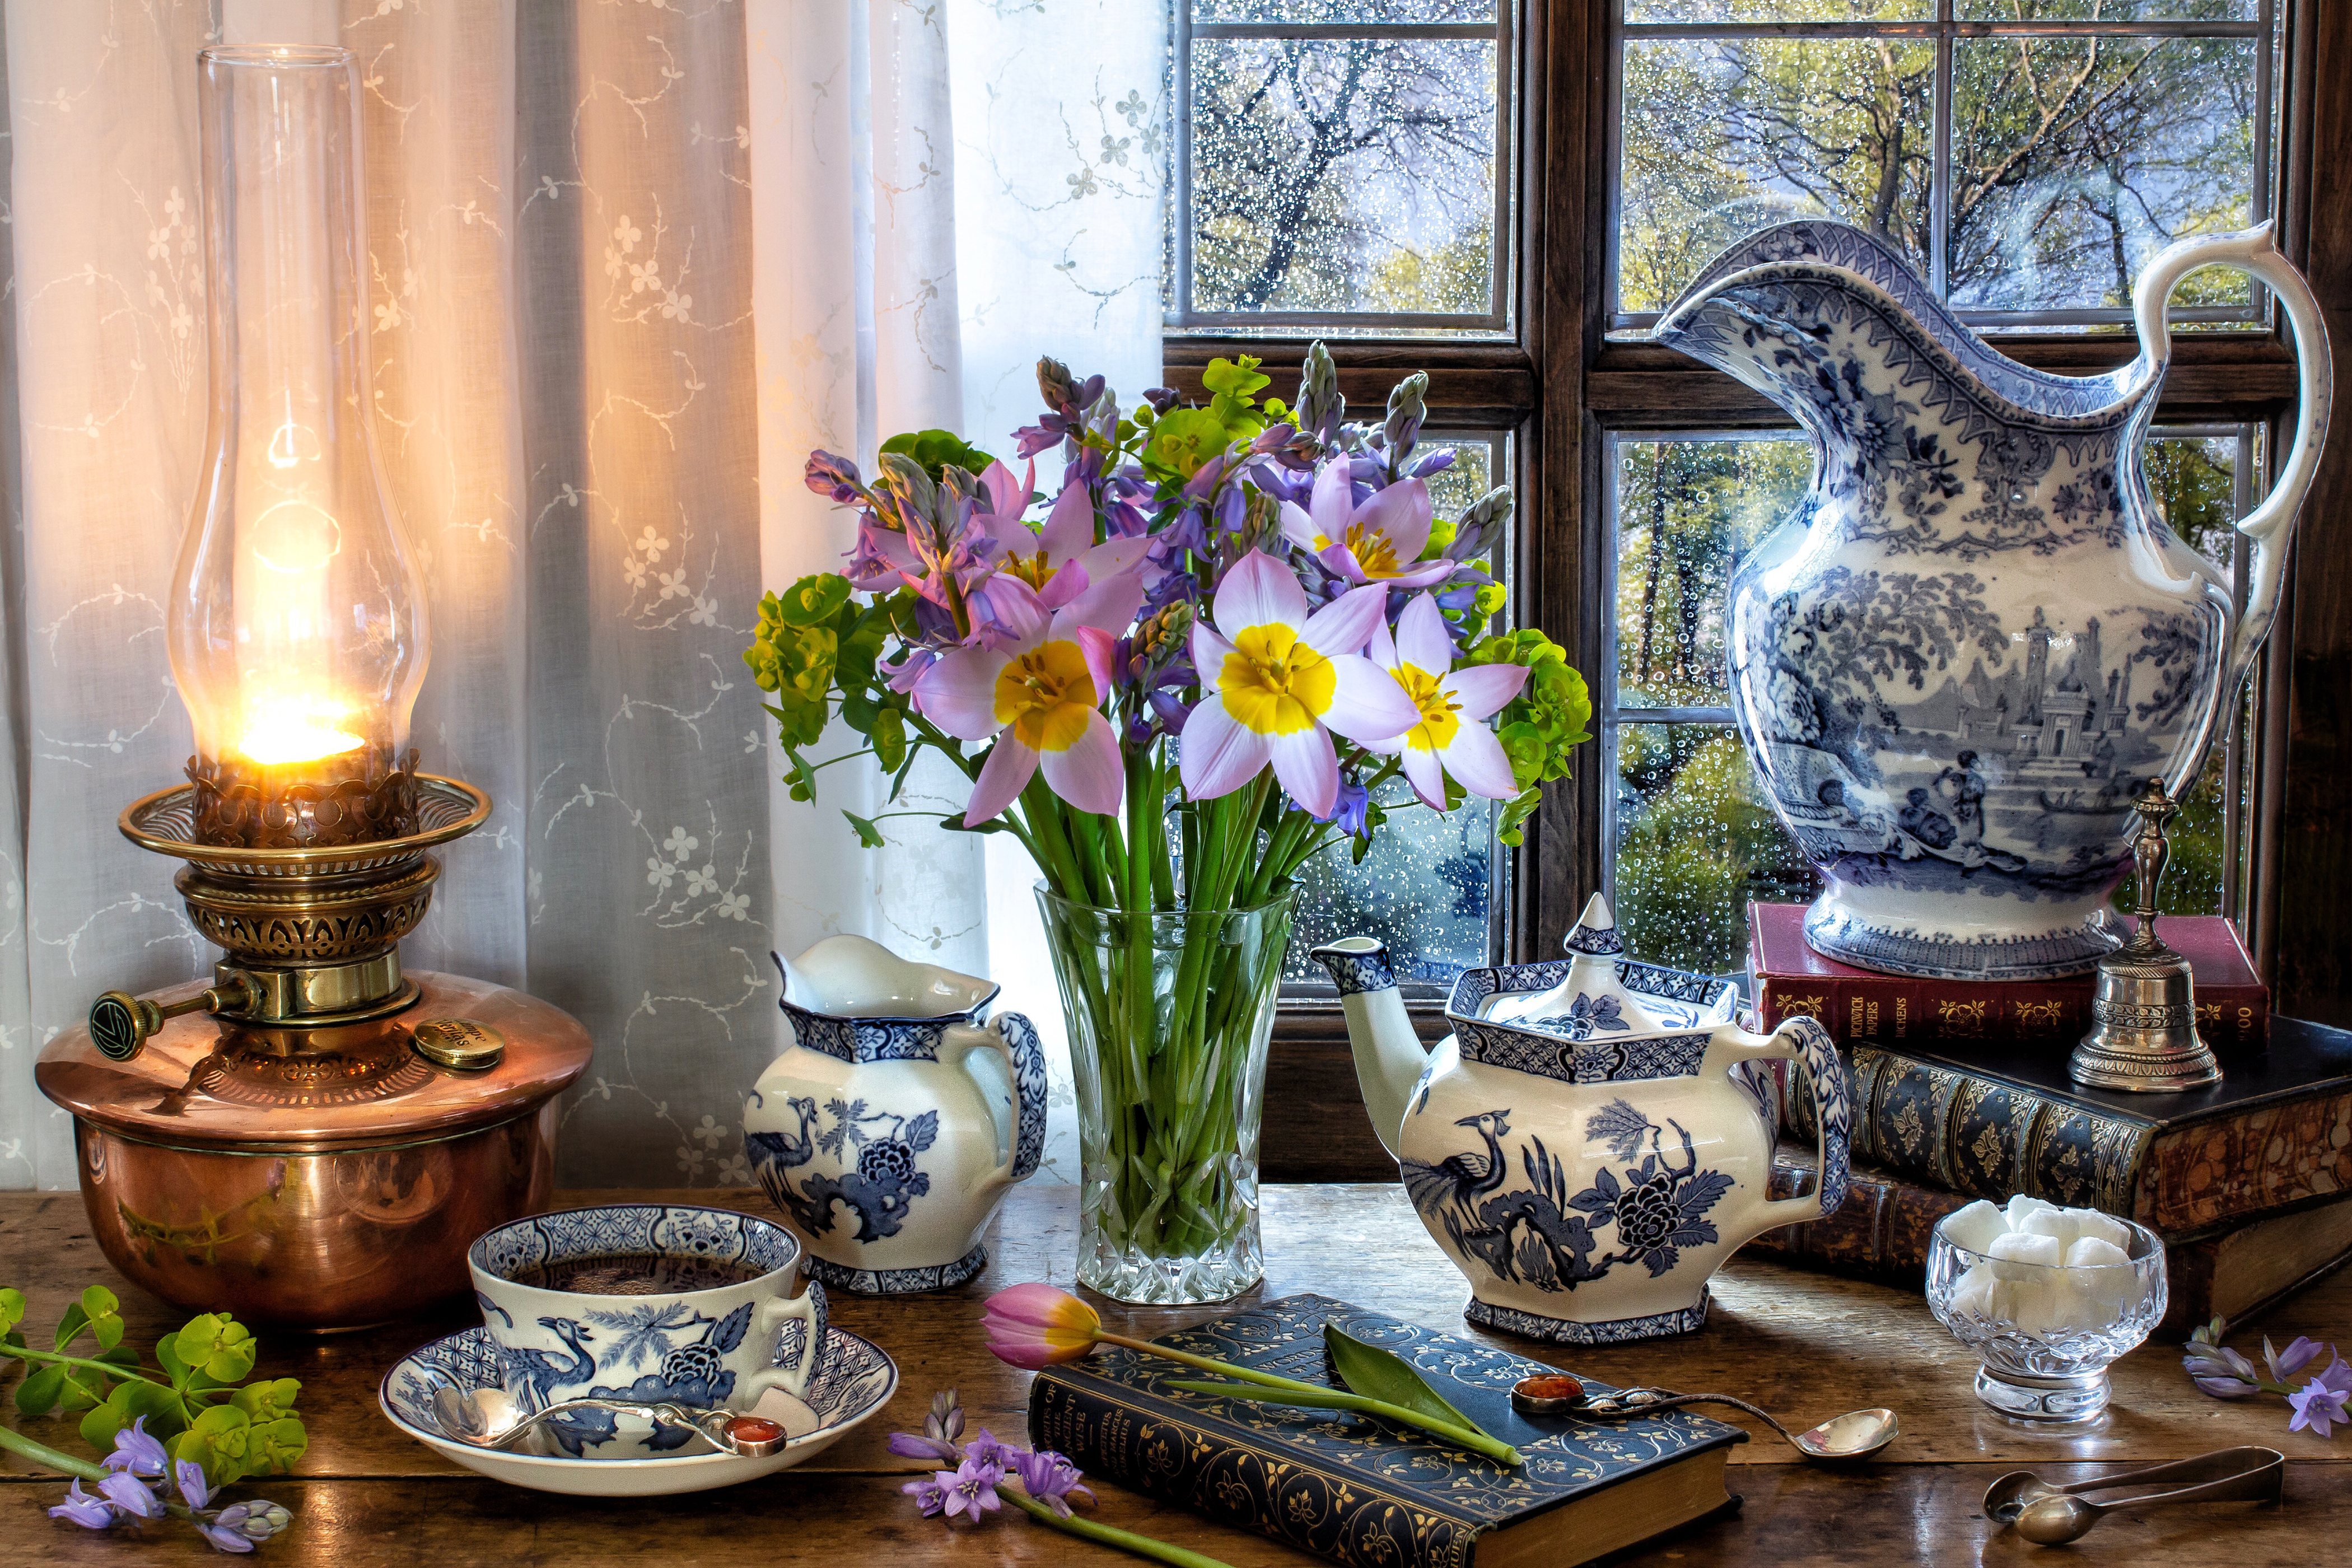 wallpapers photography, still life, book, flower, kerosene lamp, teacup, teapot, vase, window